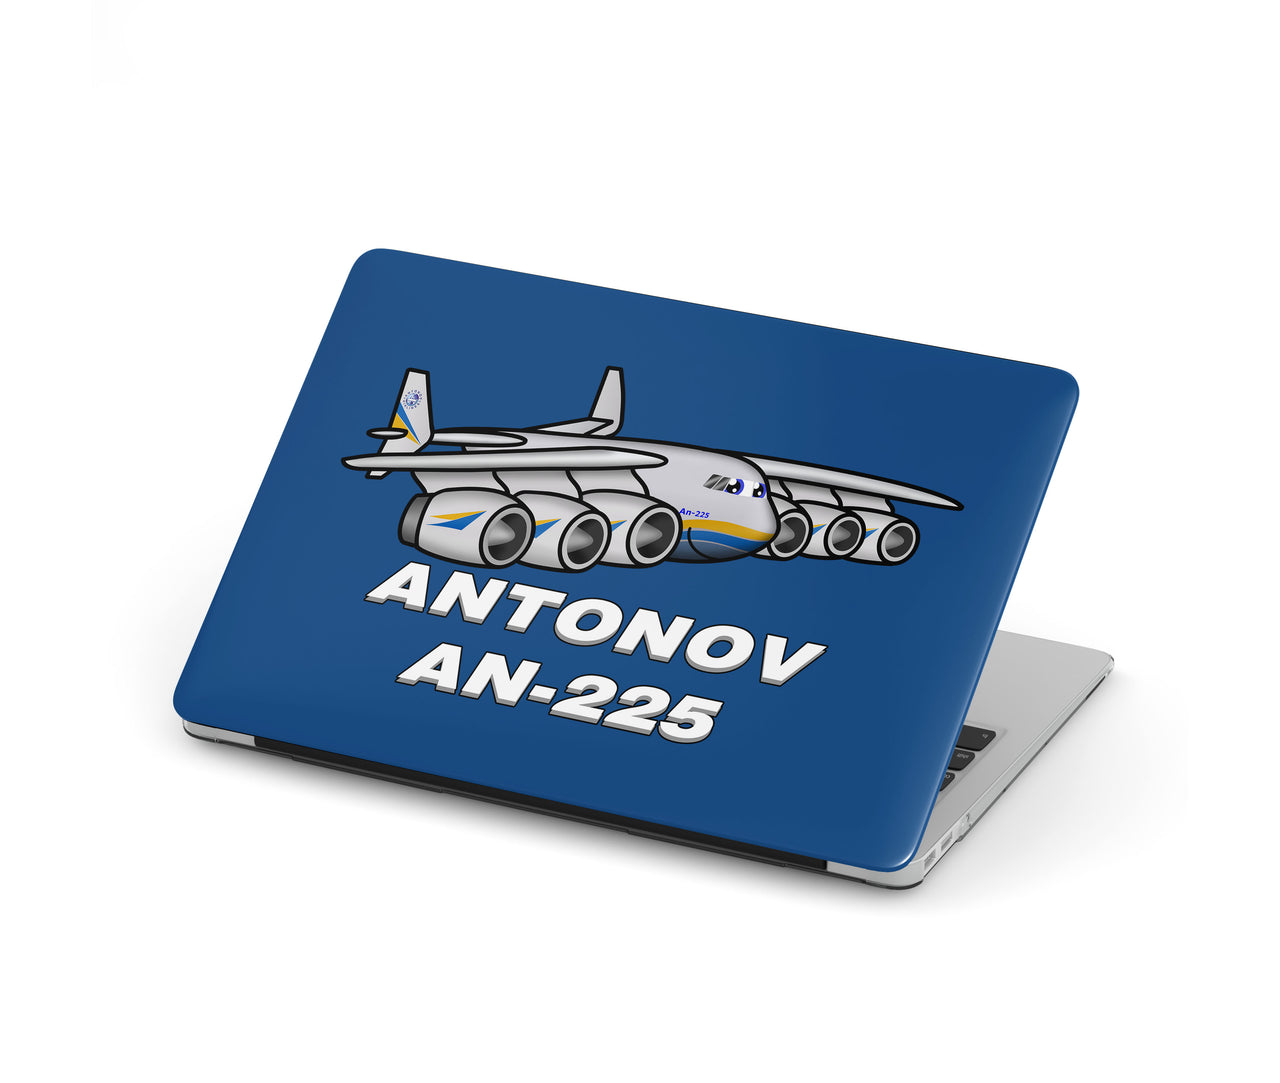 Antonov AN-225 (25) Designed Macbook Cases